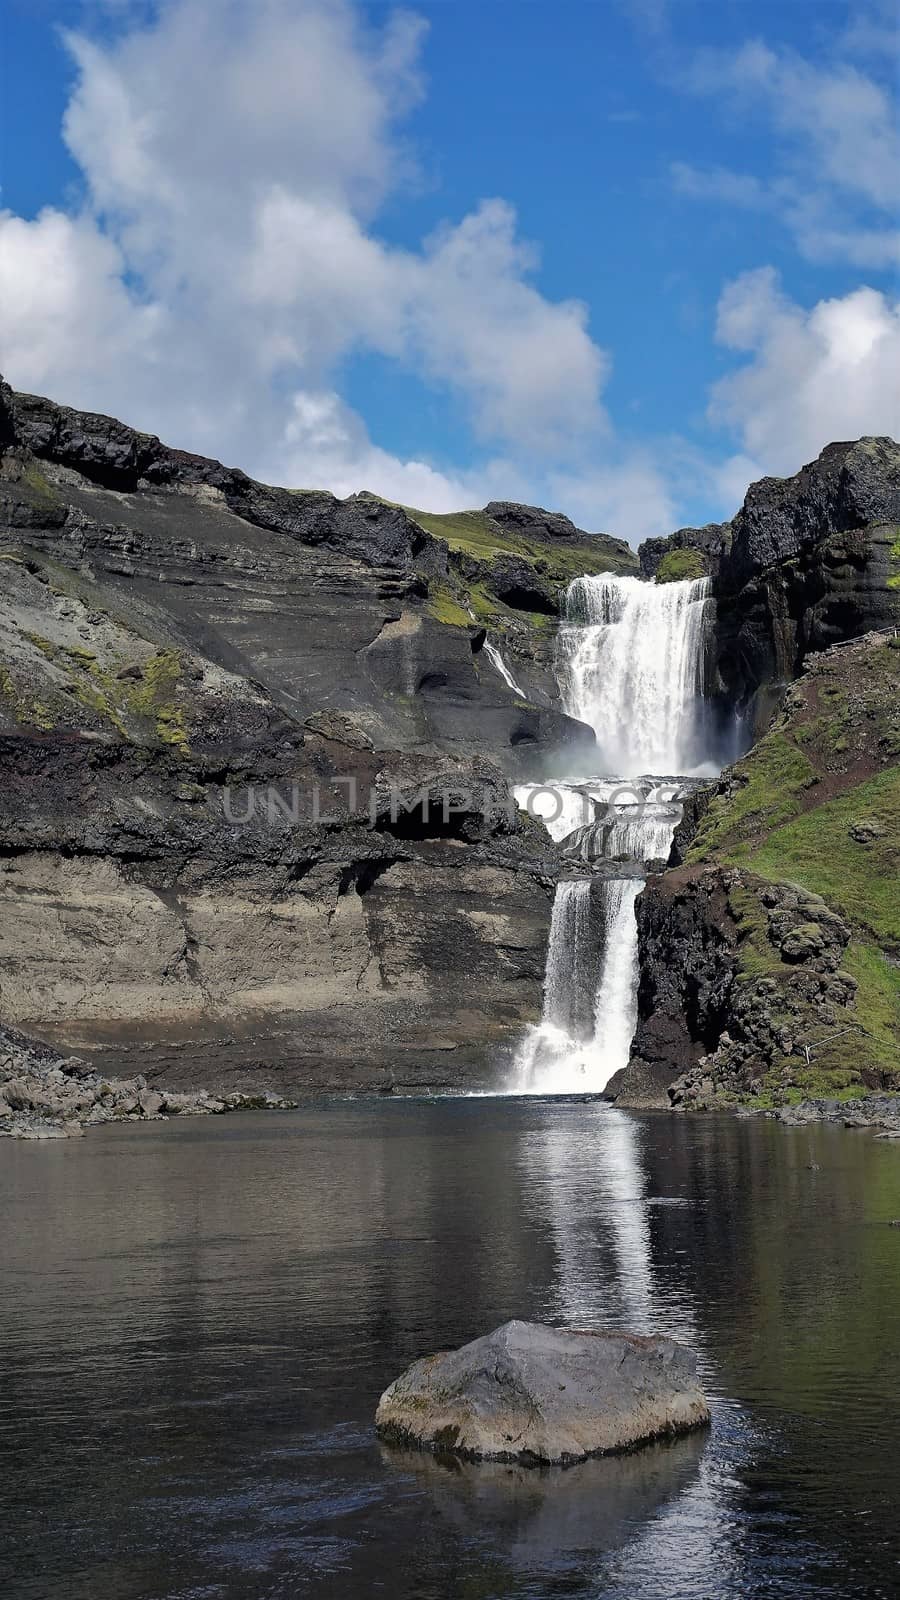 Reflection of Oferufoss waterfall, Eldgja gorge, Iceland